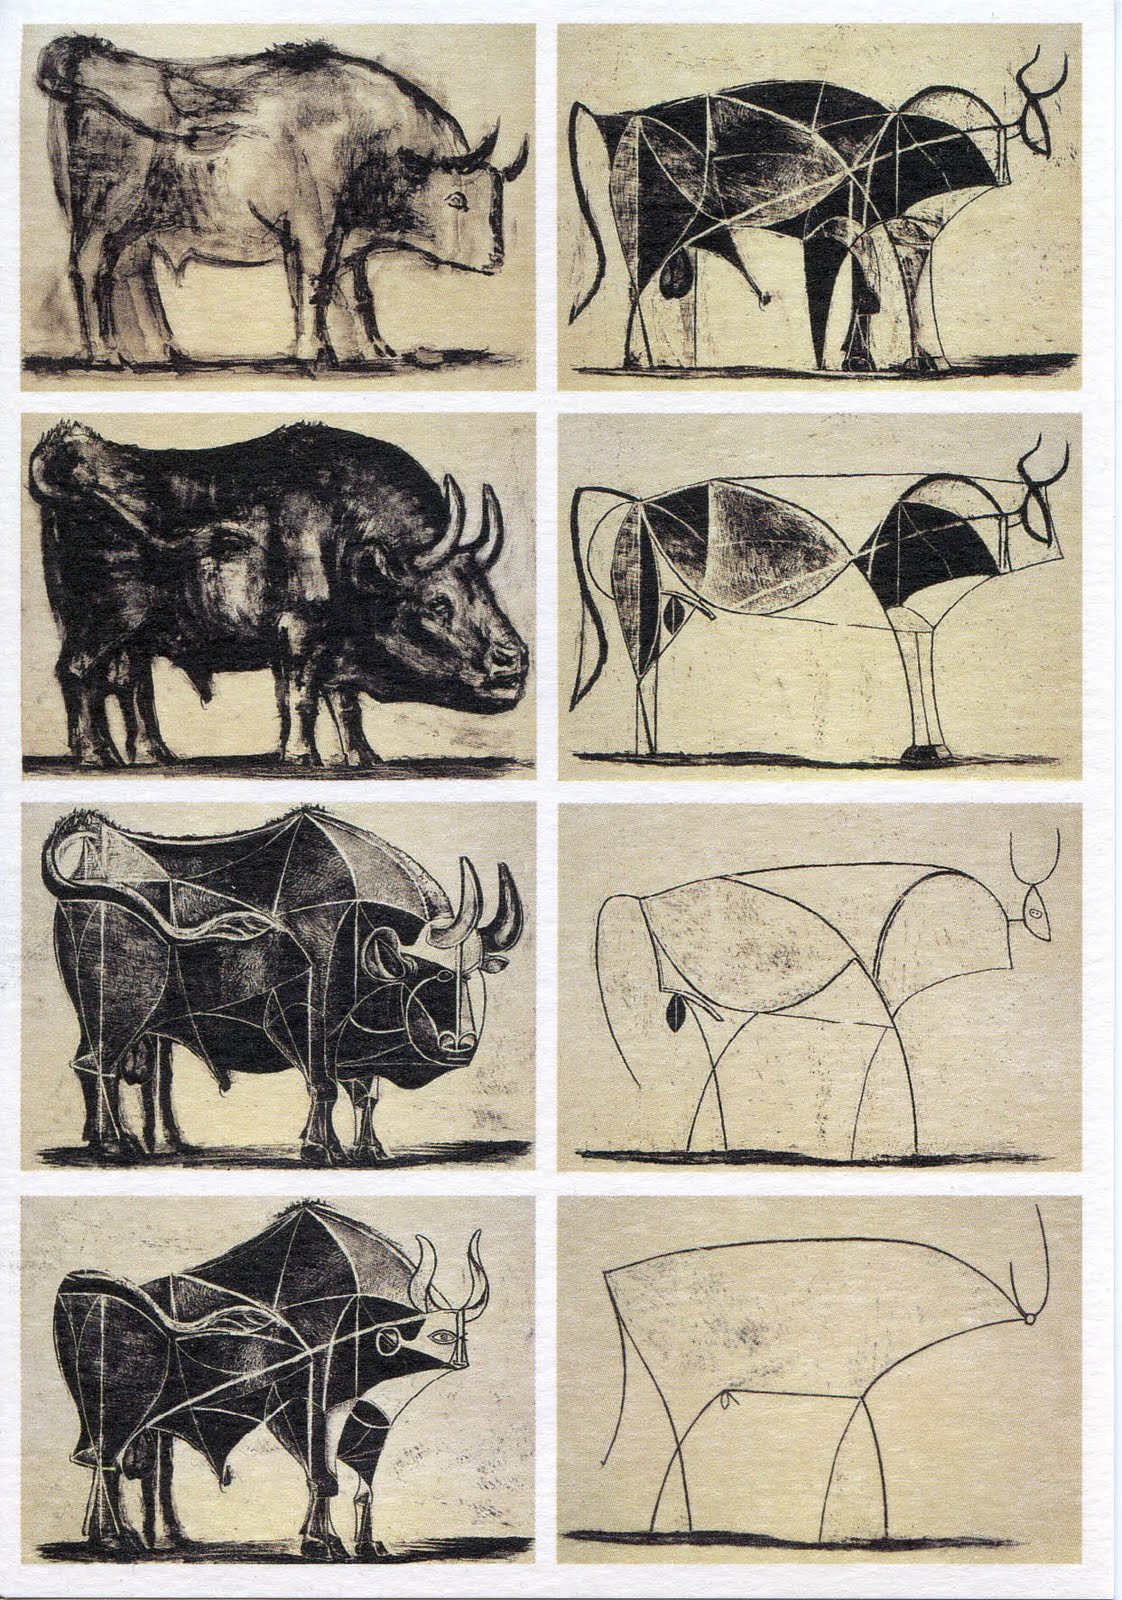 Picasso's Bull